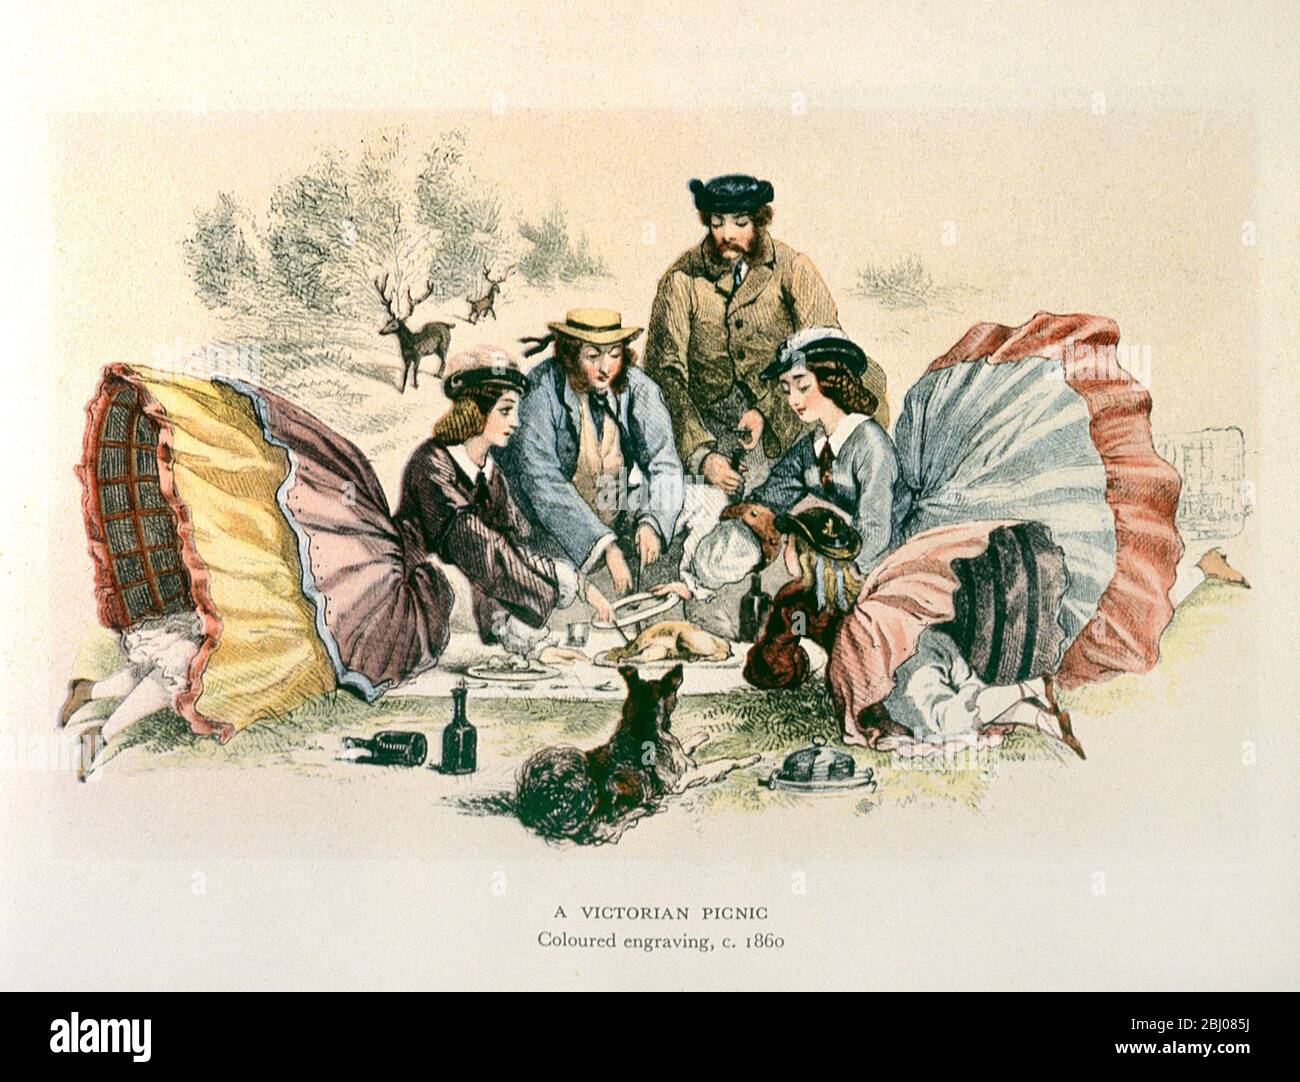 Victorian picnic - coloured engraving 1860 - - - - Stock Photo